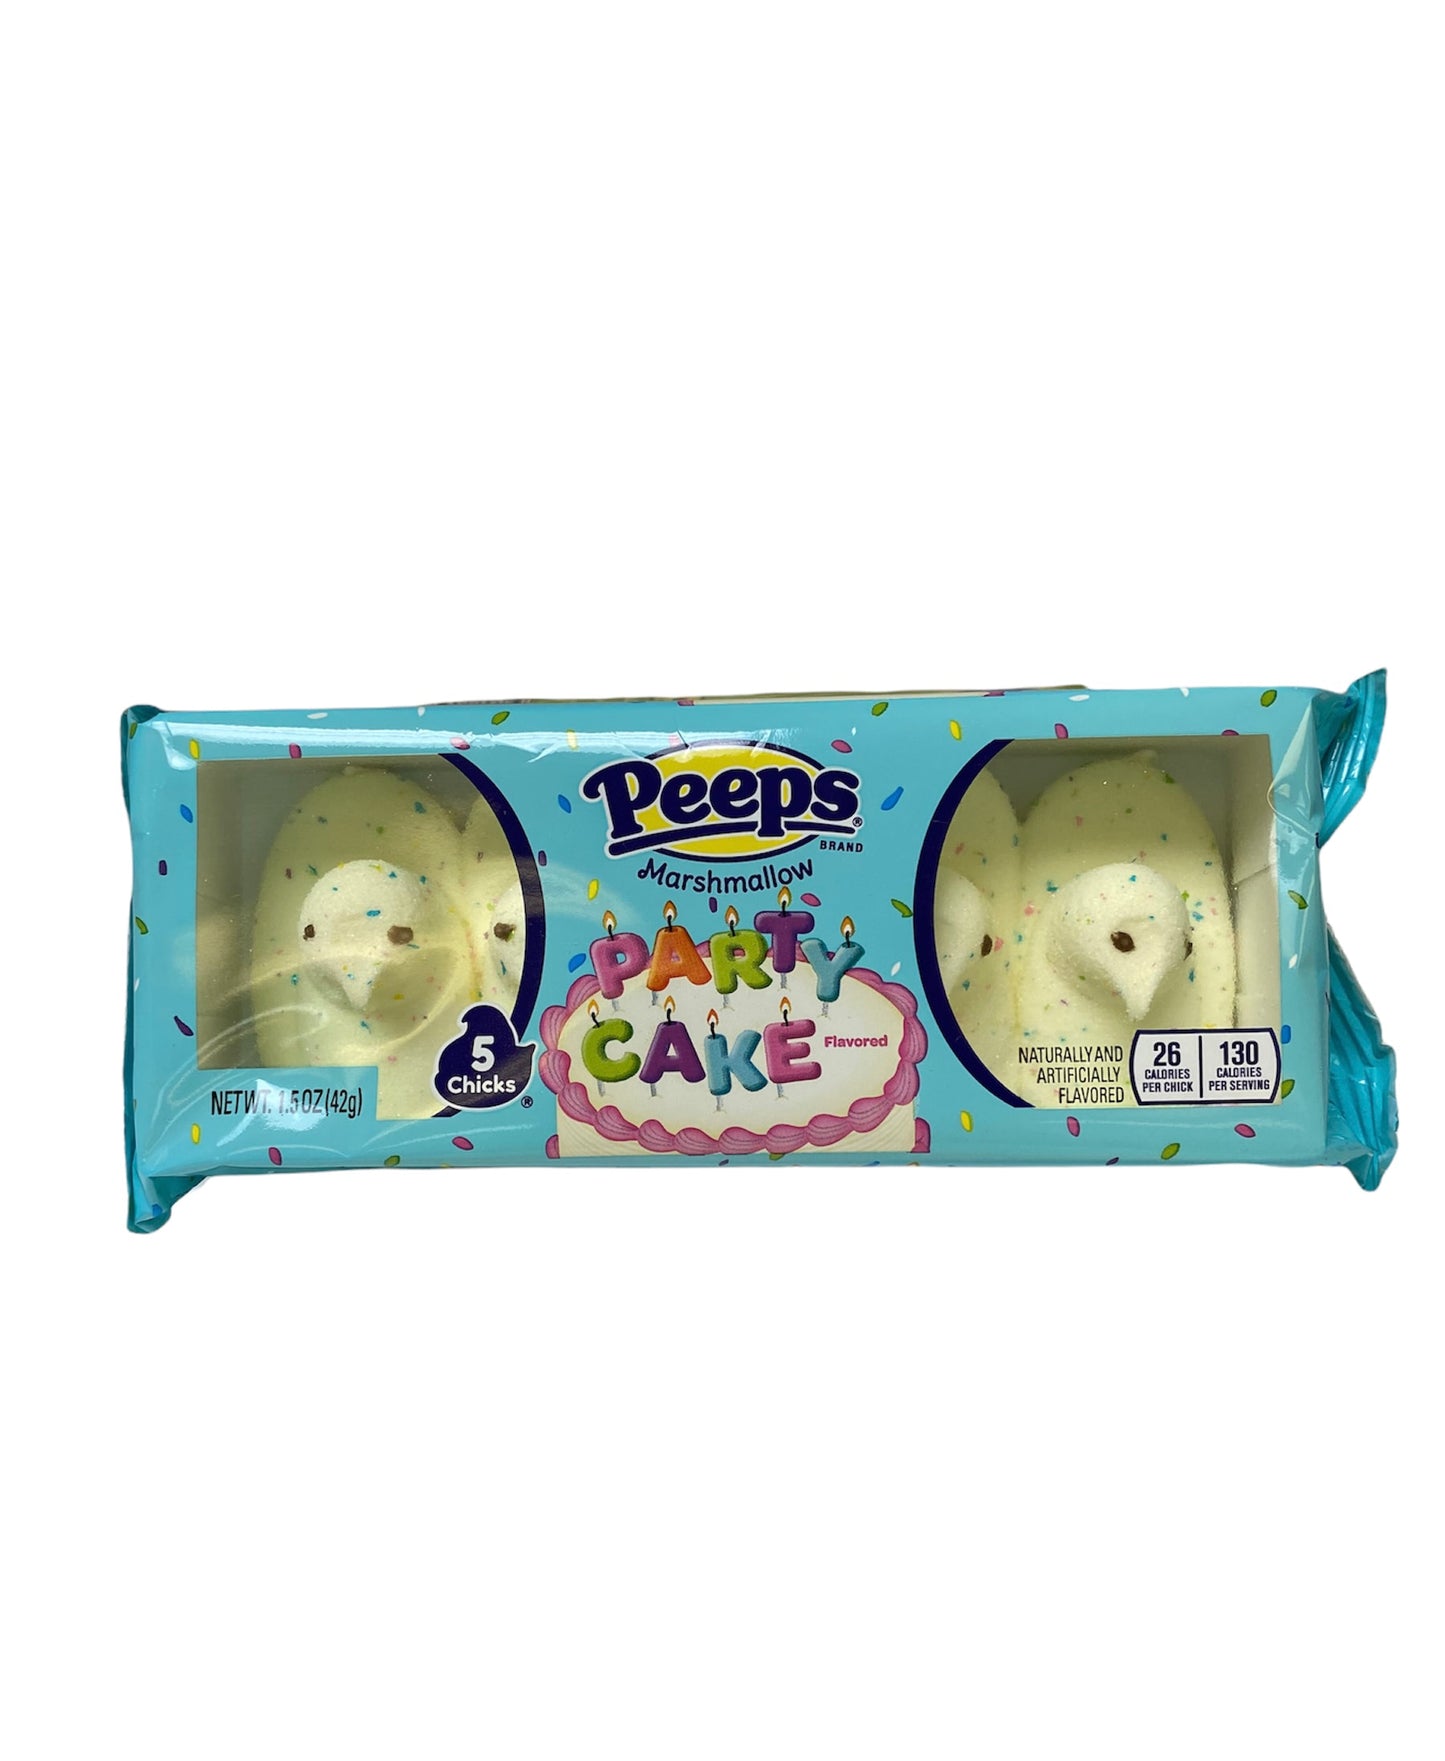 Peeps Party Cake Chicks - 5ct